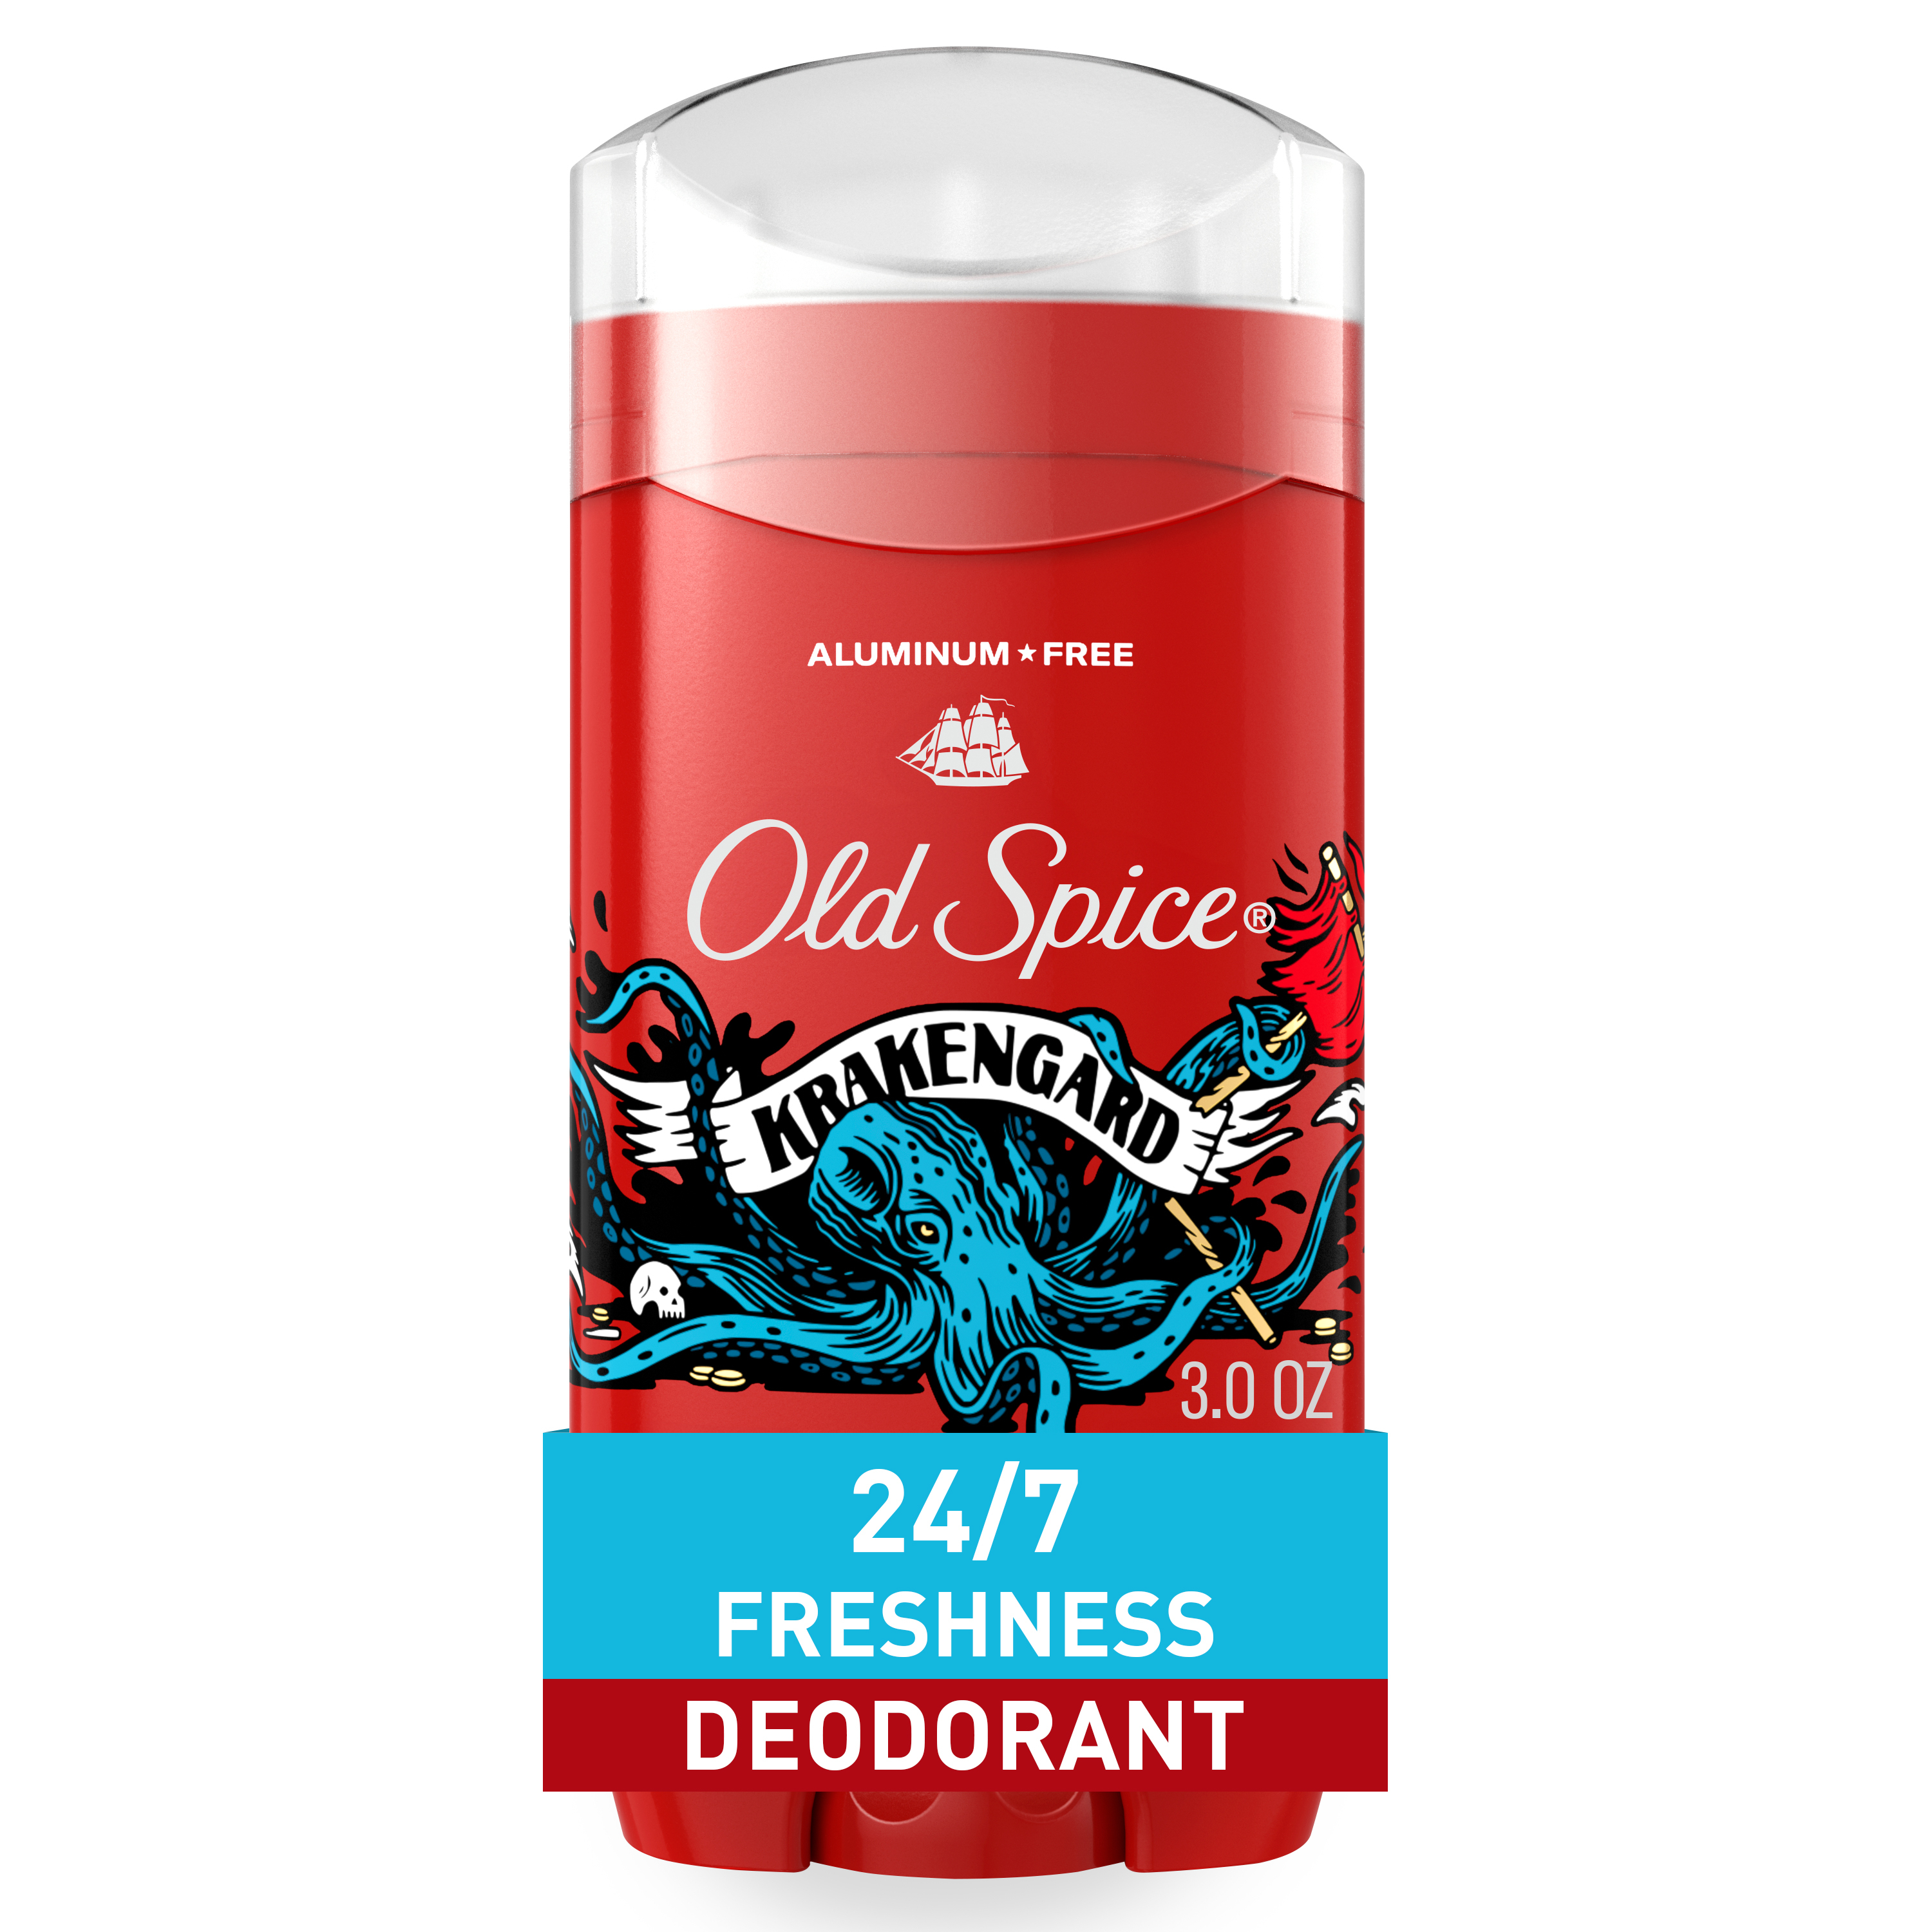 Old Spice Aluminum Free Deodorant for Men, Krakengard, 48 Hr. Protection, 3.0 oz - image 1 of 8